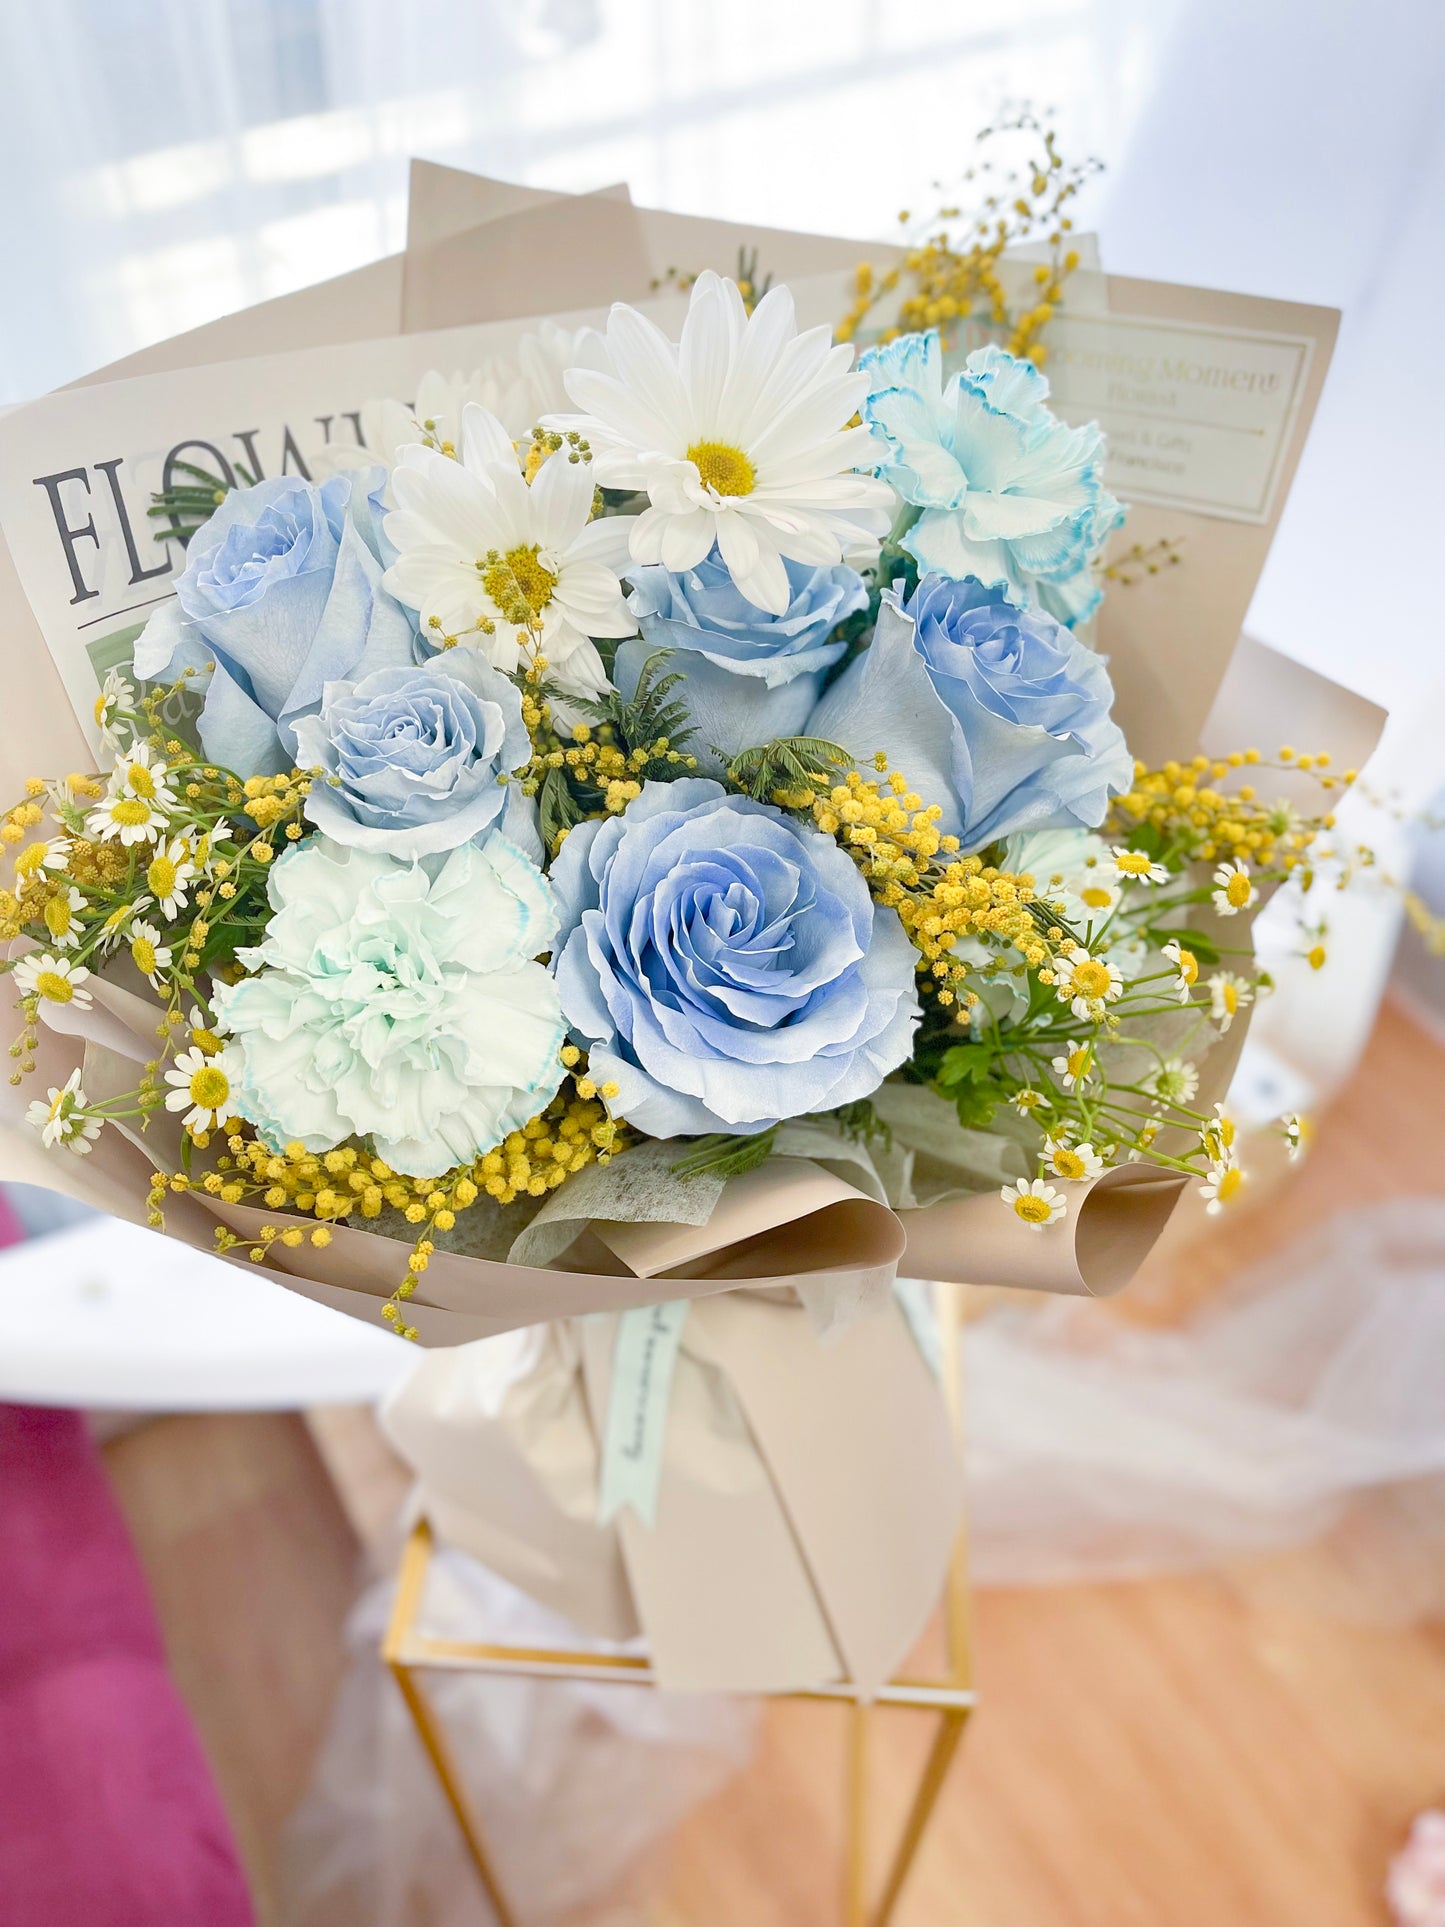 [FRESH FLOWER] Mix bouquet florist Design bouquet